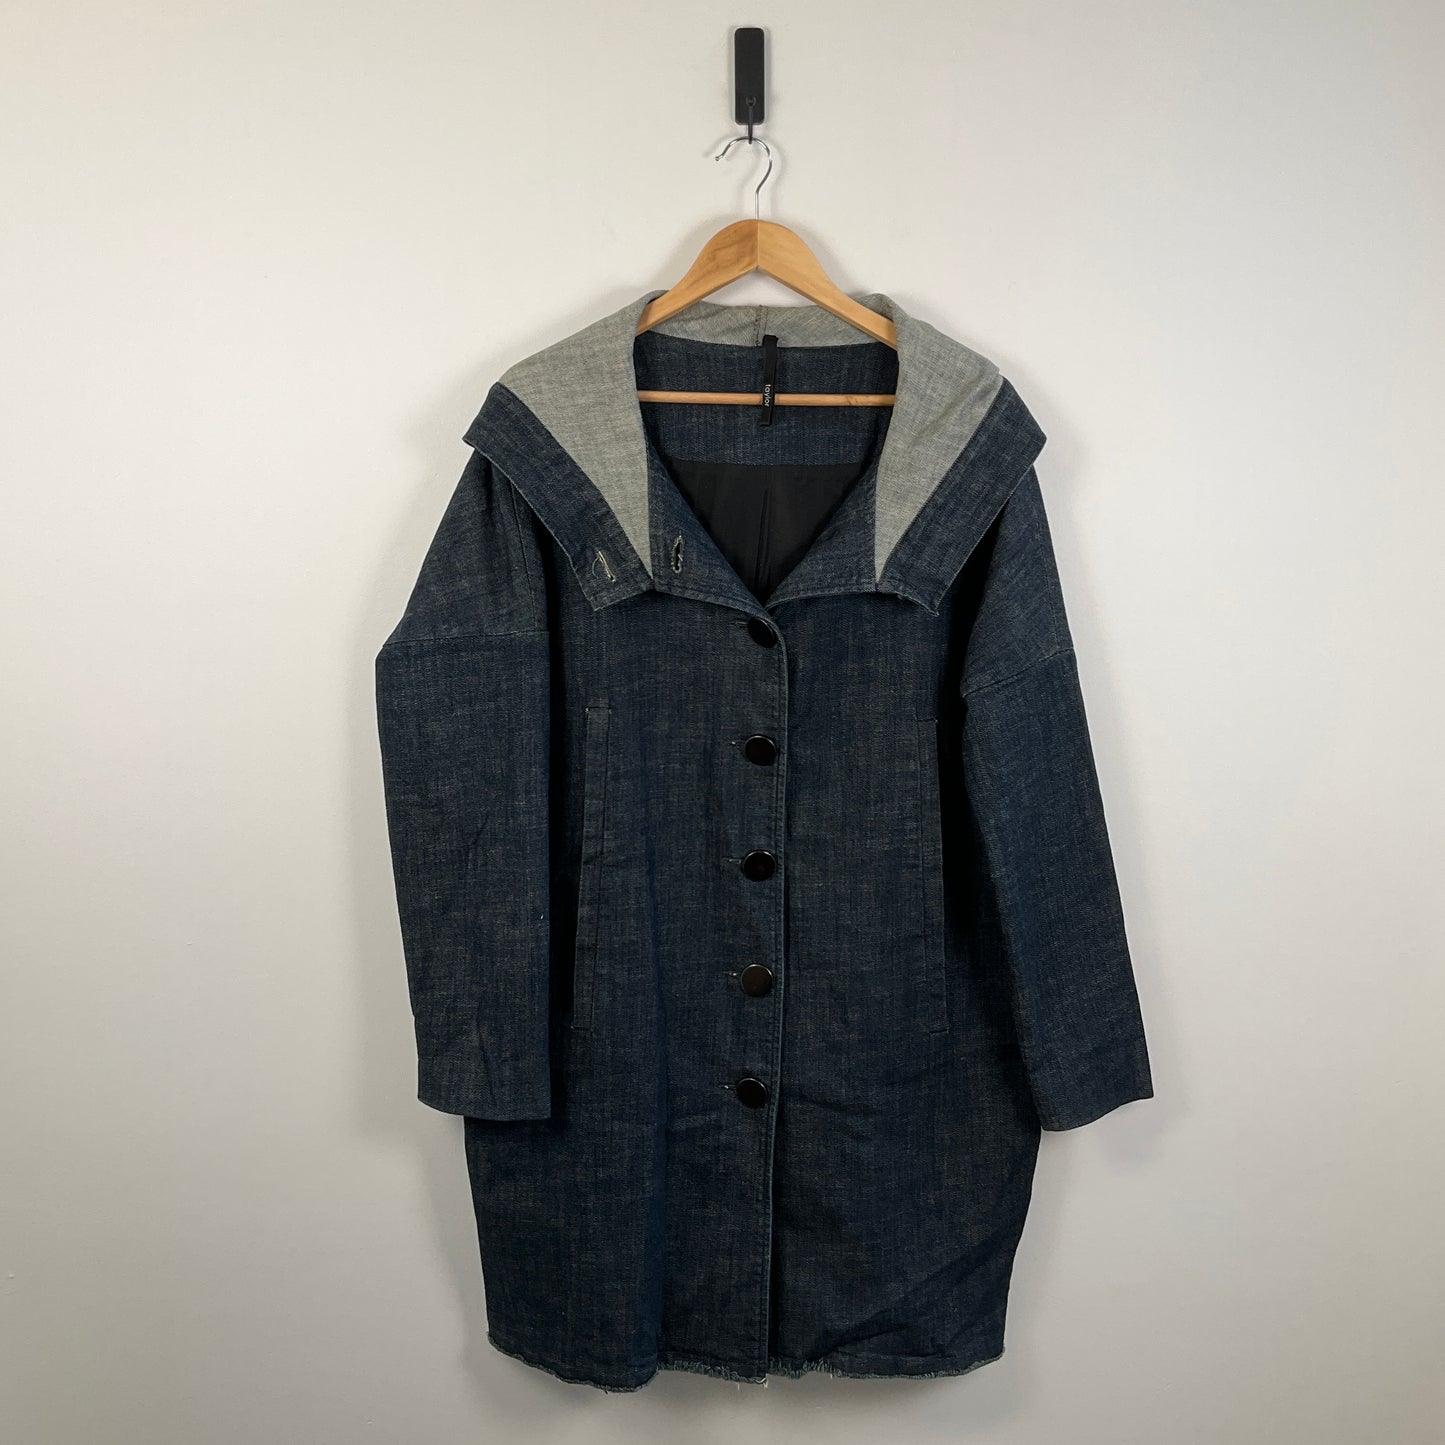 Taylor - Denim Jacket/Coat